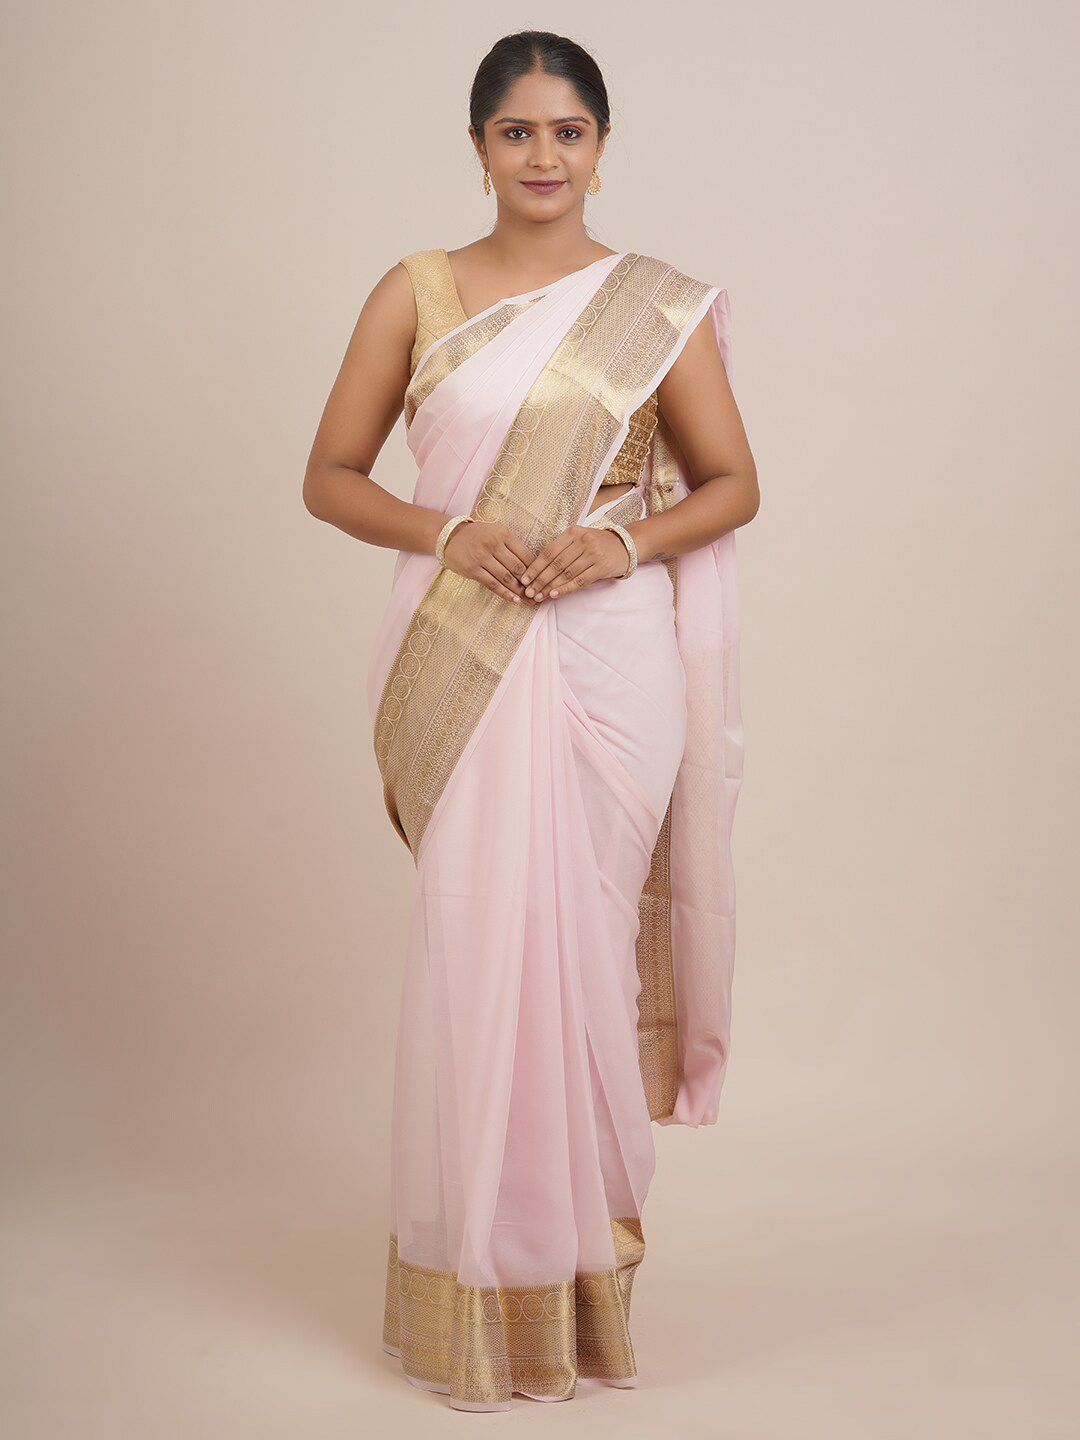 Pothys Pink & Gold-Toned Ethnic Motifs Zari Pure Silk Saree Price in India